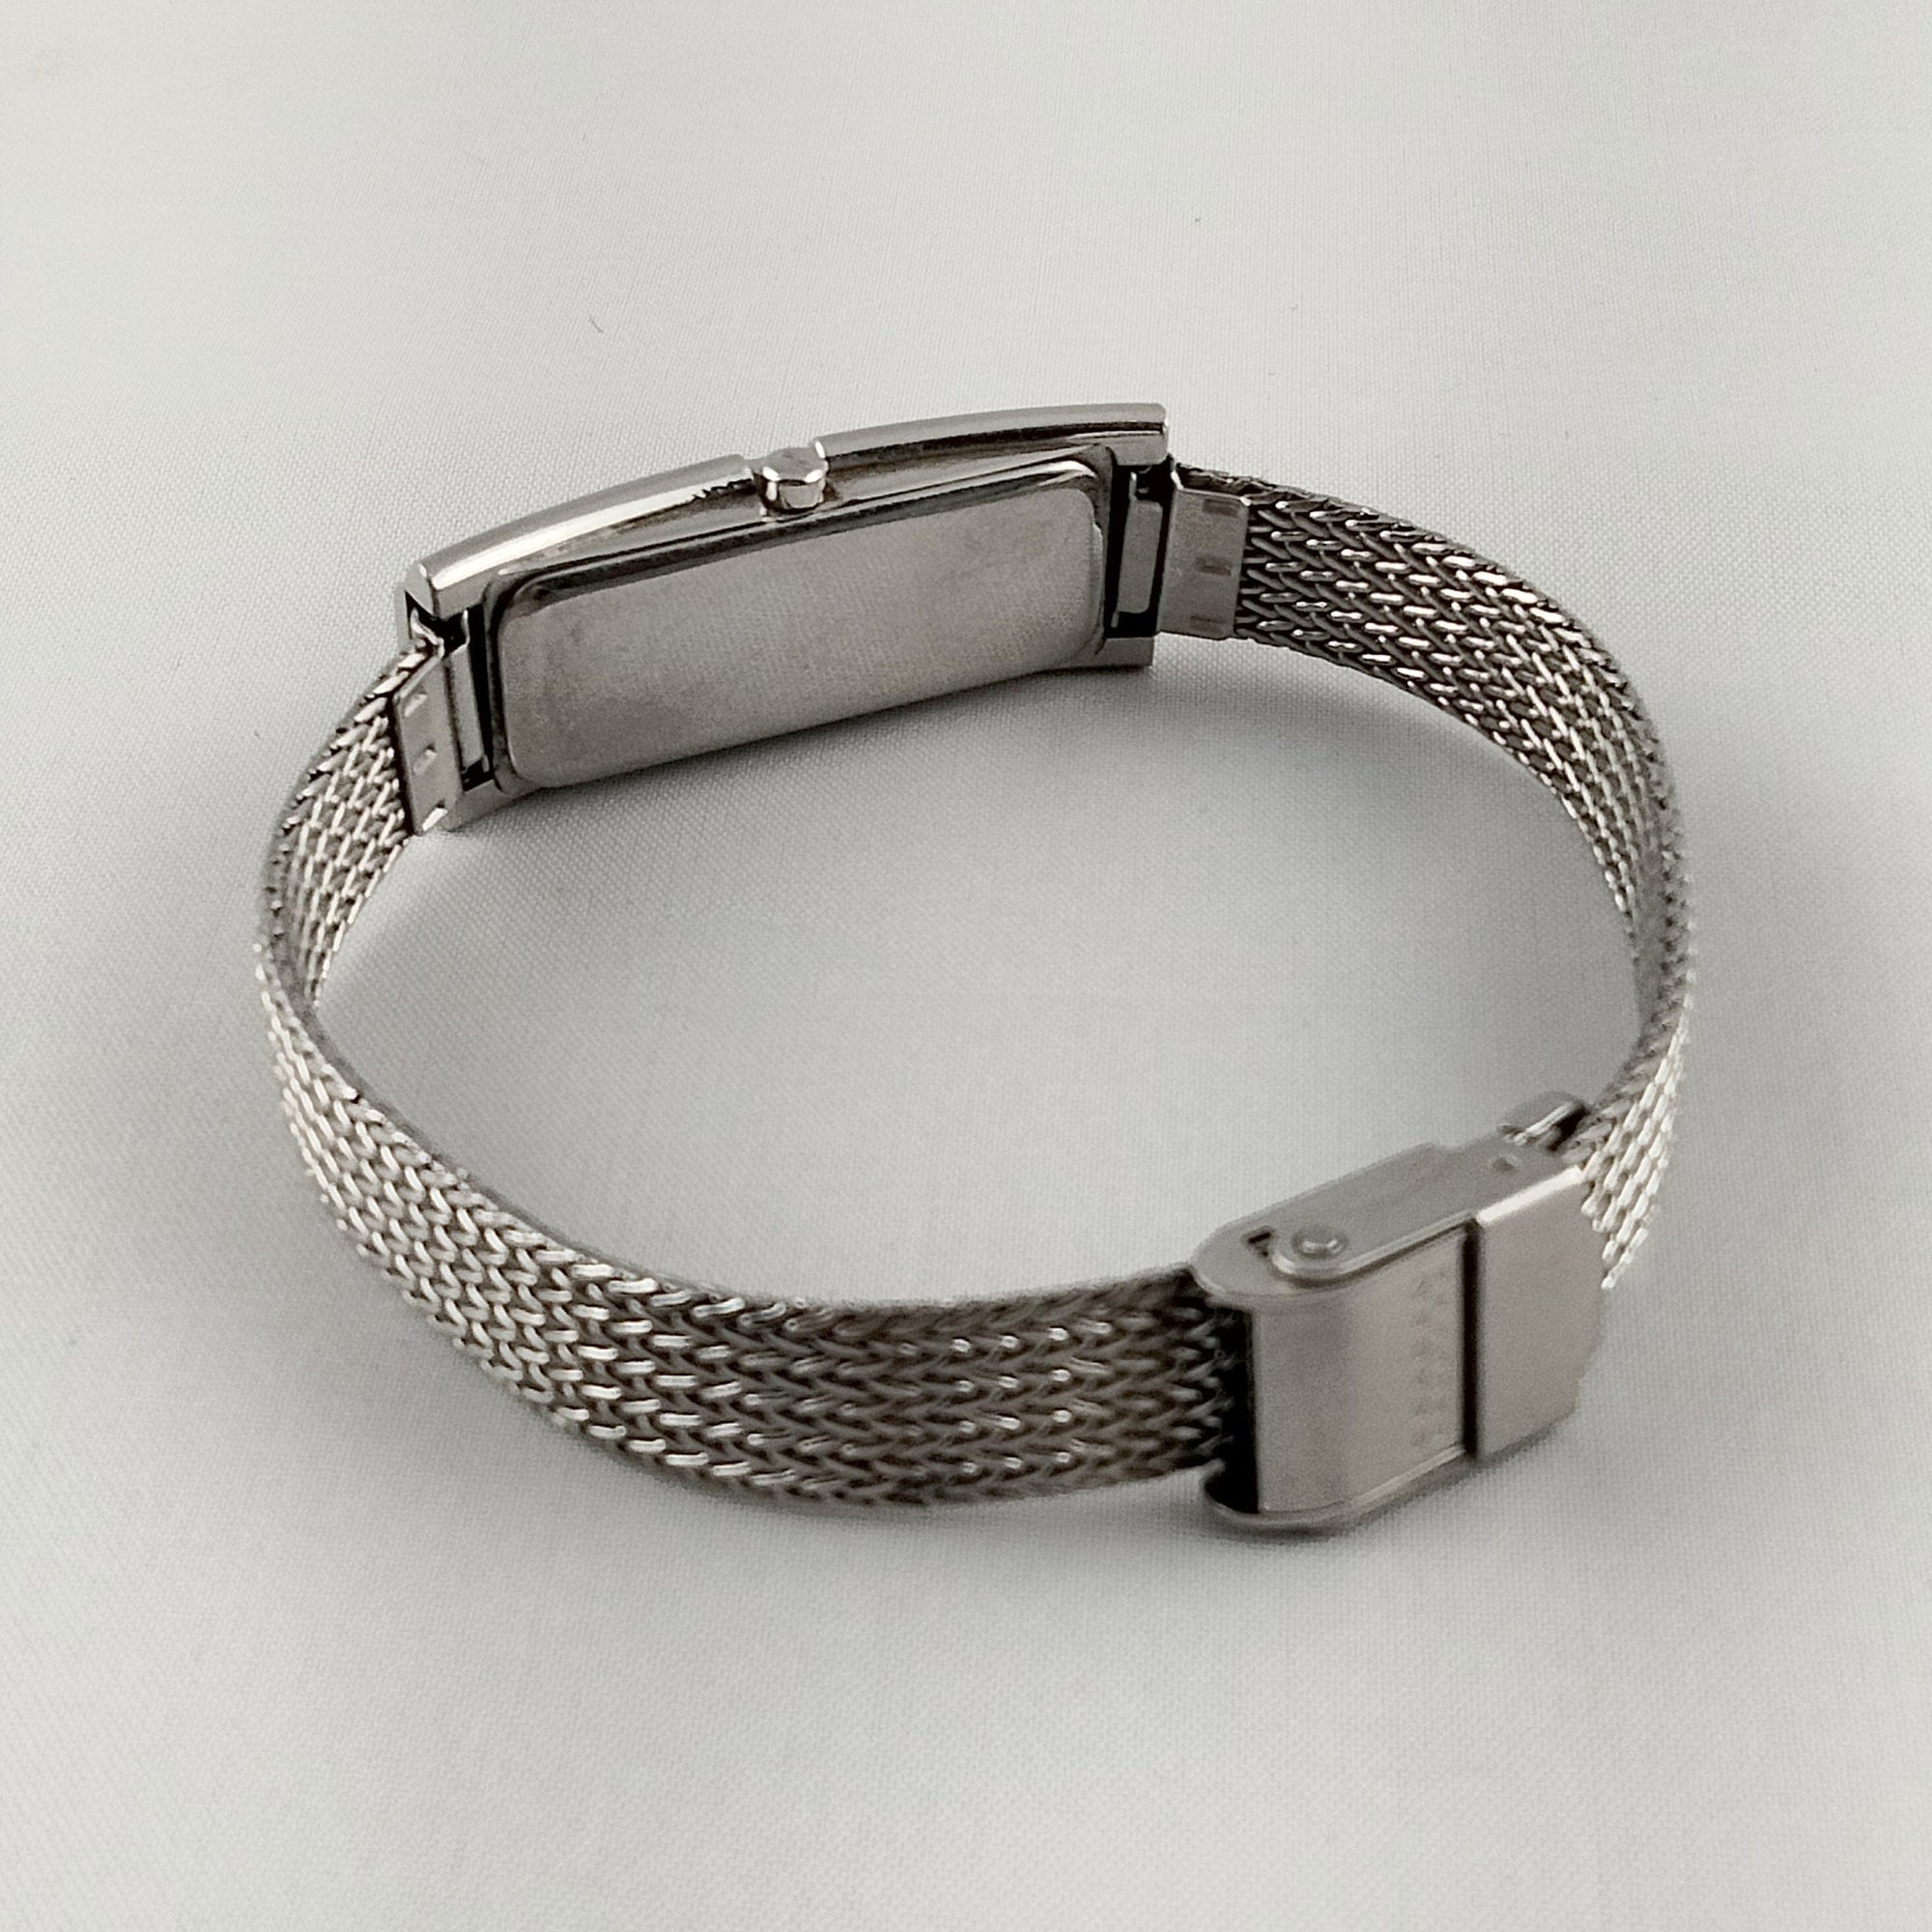 I Like Mikes Mid Century Modern Watches Skagen Women's Thin Stainless Steel Watch, Bracelet Strap